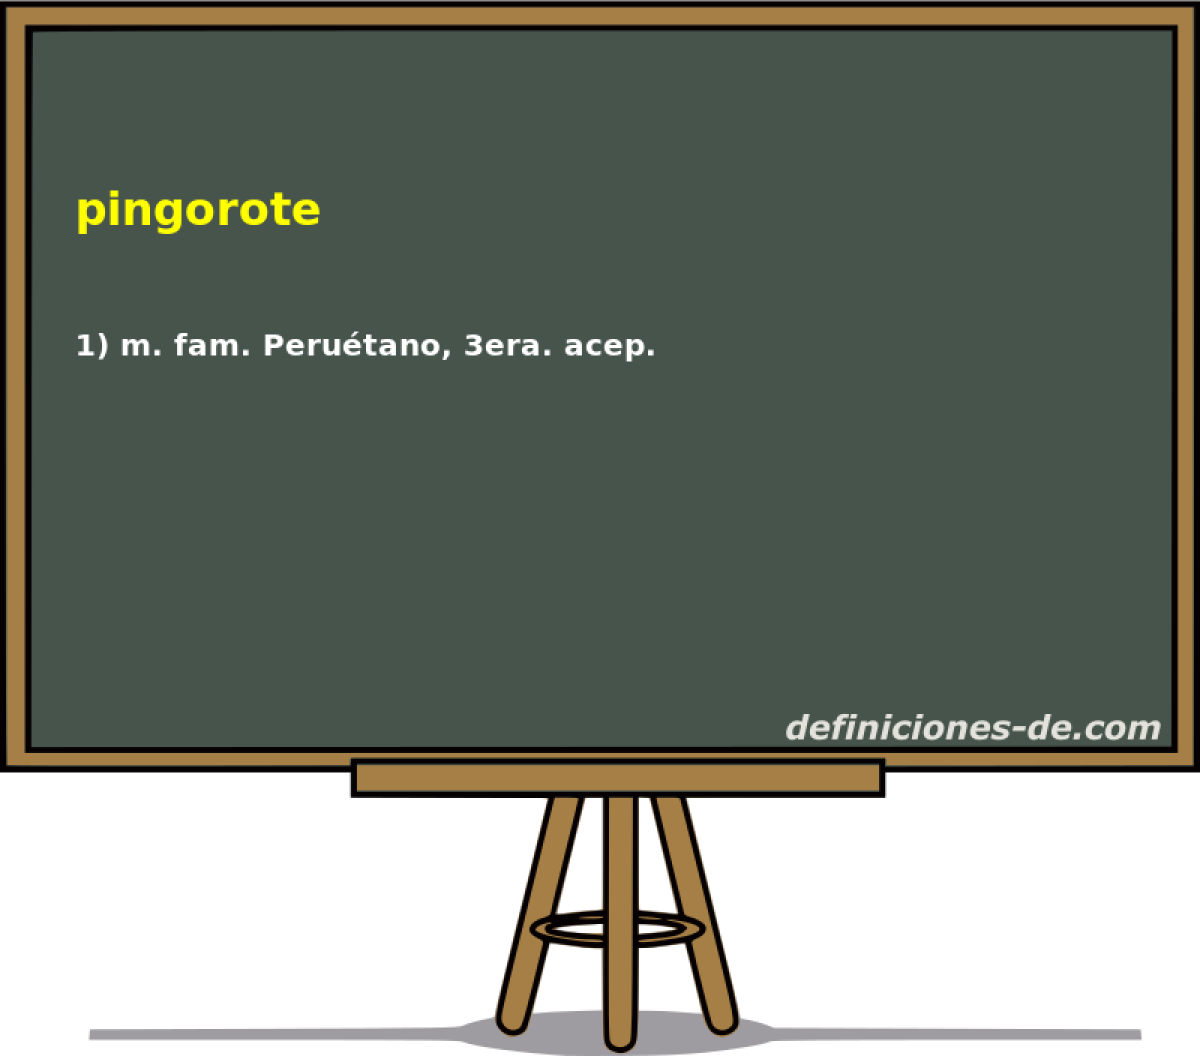 pingorote 